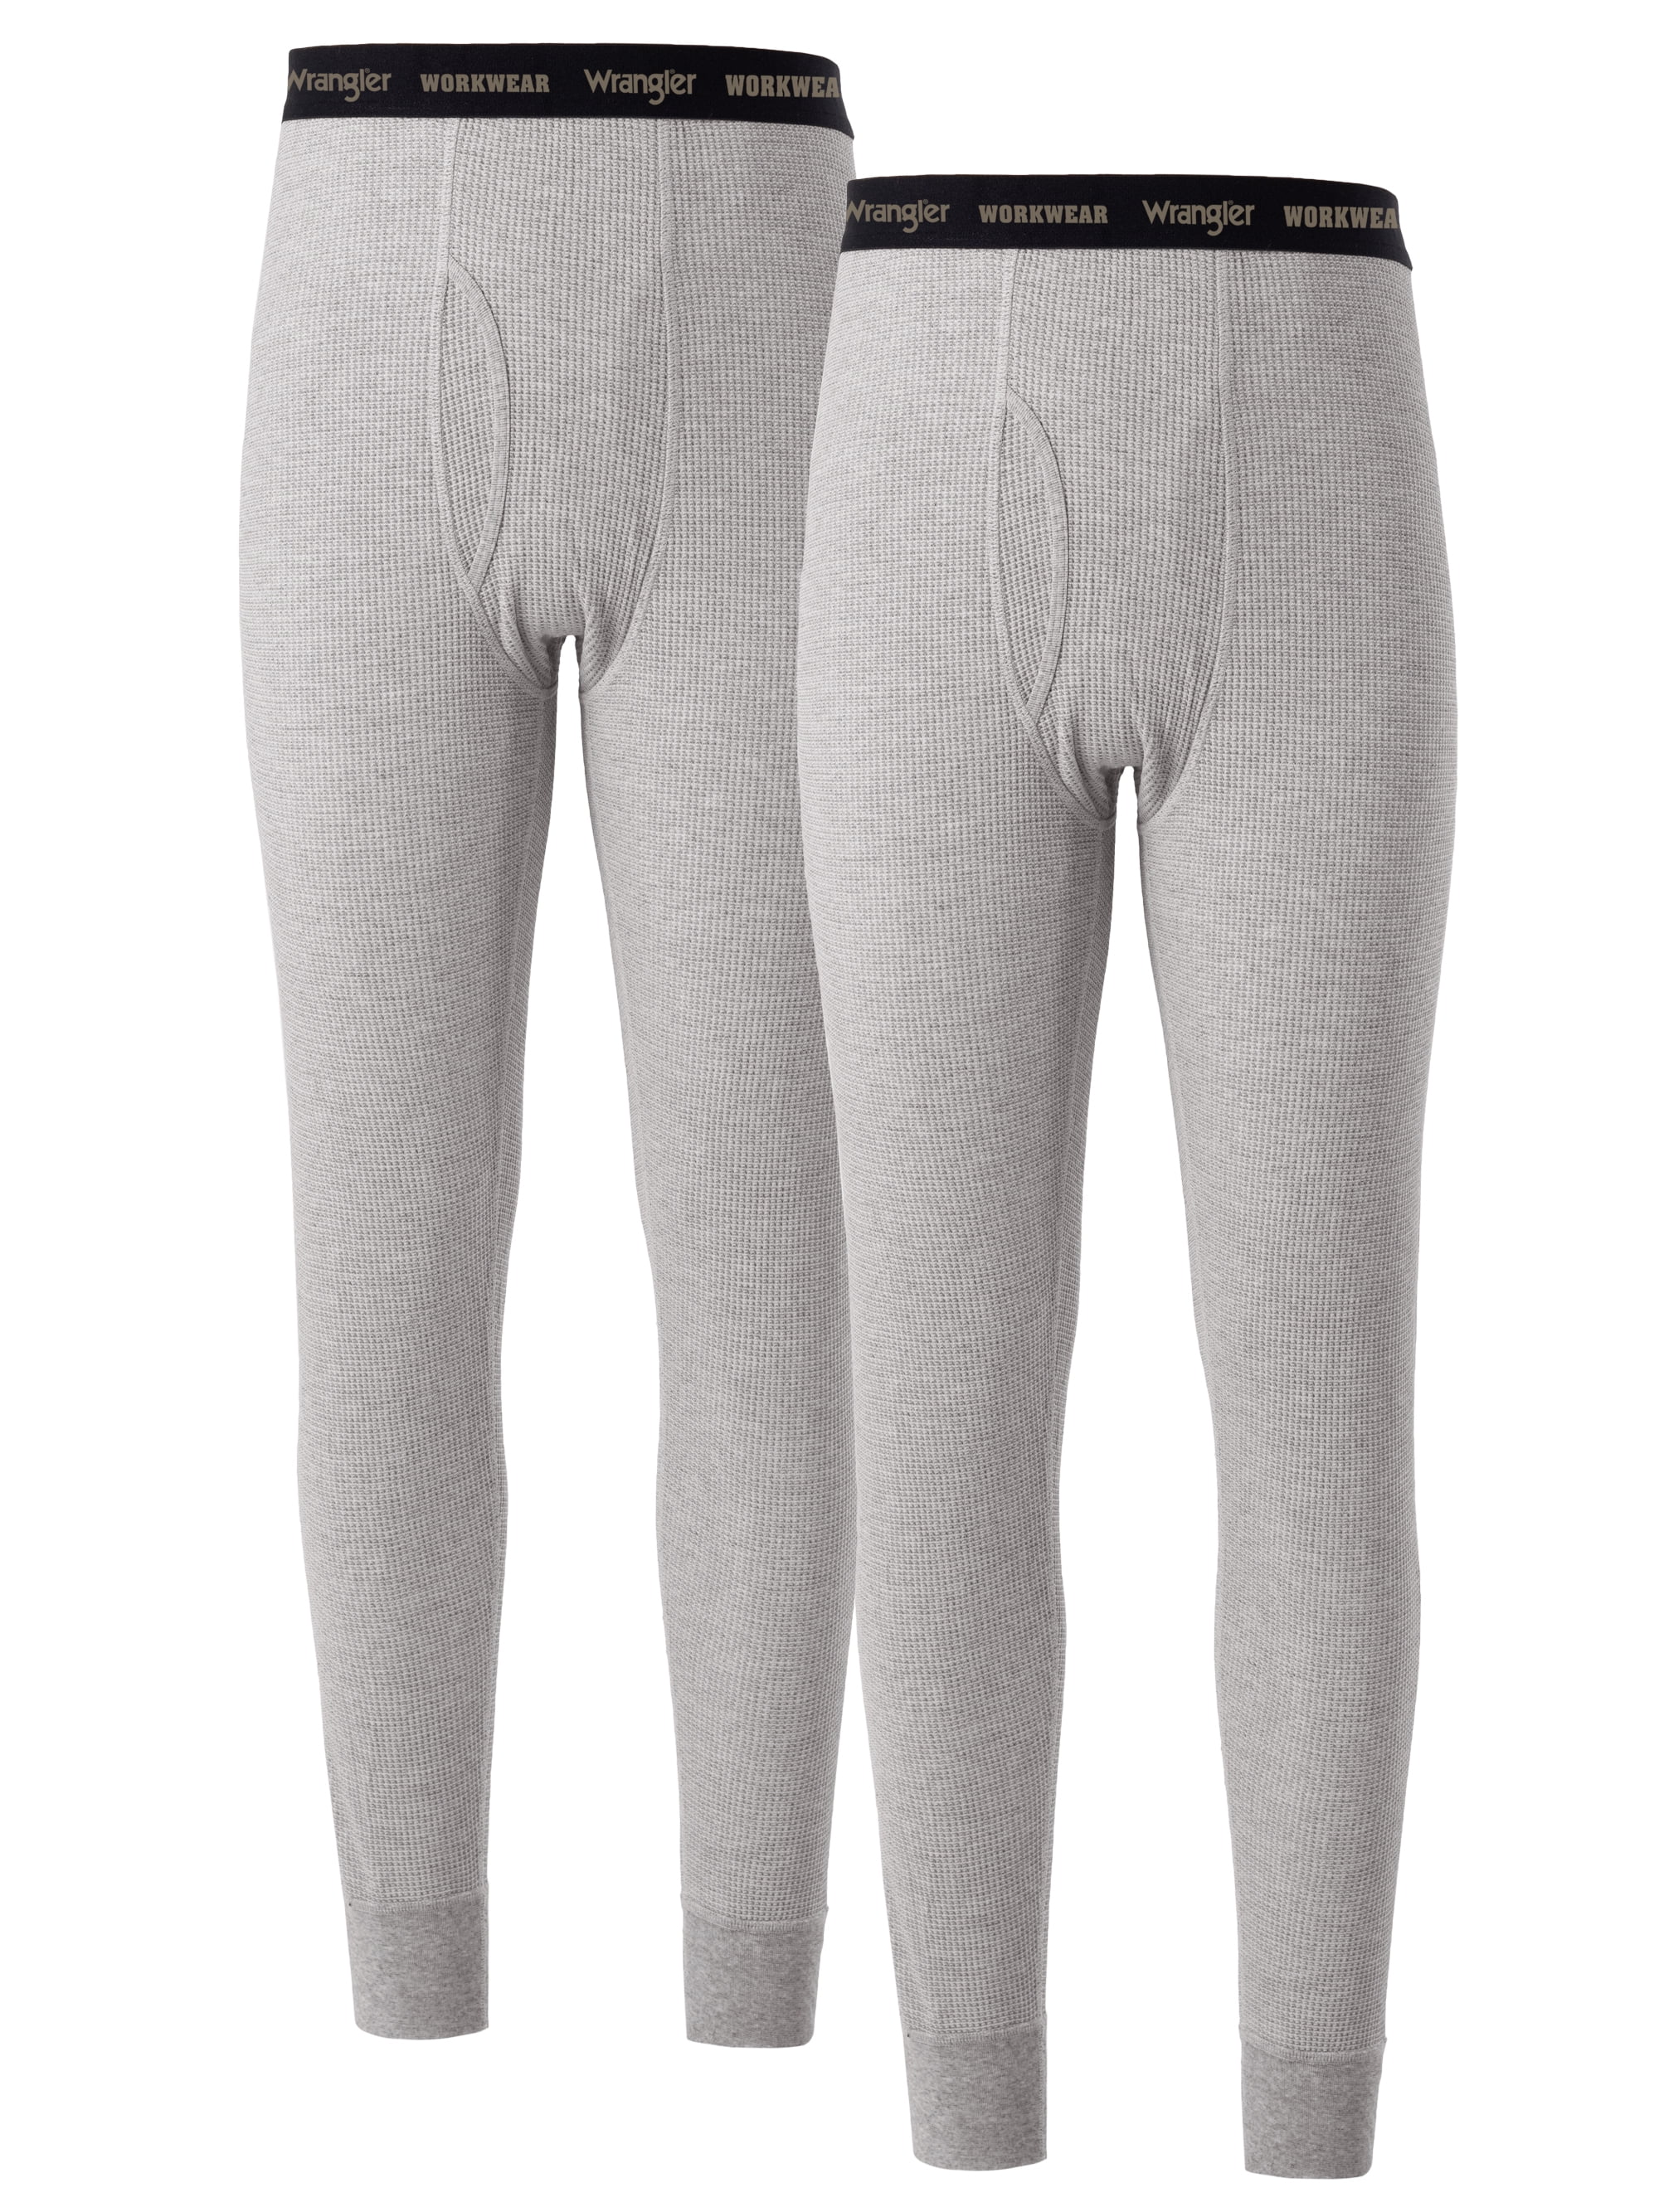 Thermo Underwear 2x Men's Warm Underwear Winter Thermal Long Johns Size 5-9 